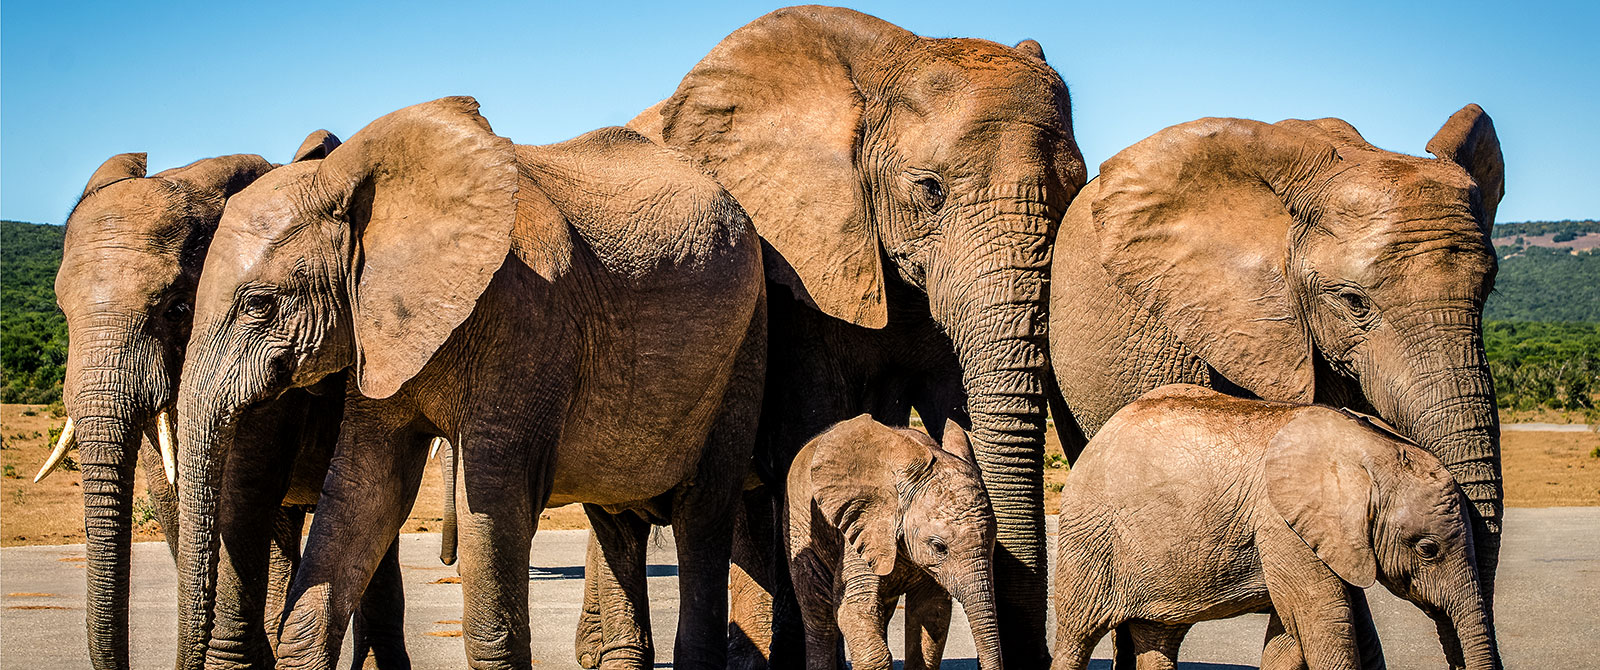 Elephants on Safari - South Africa Family Safari Package